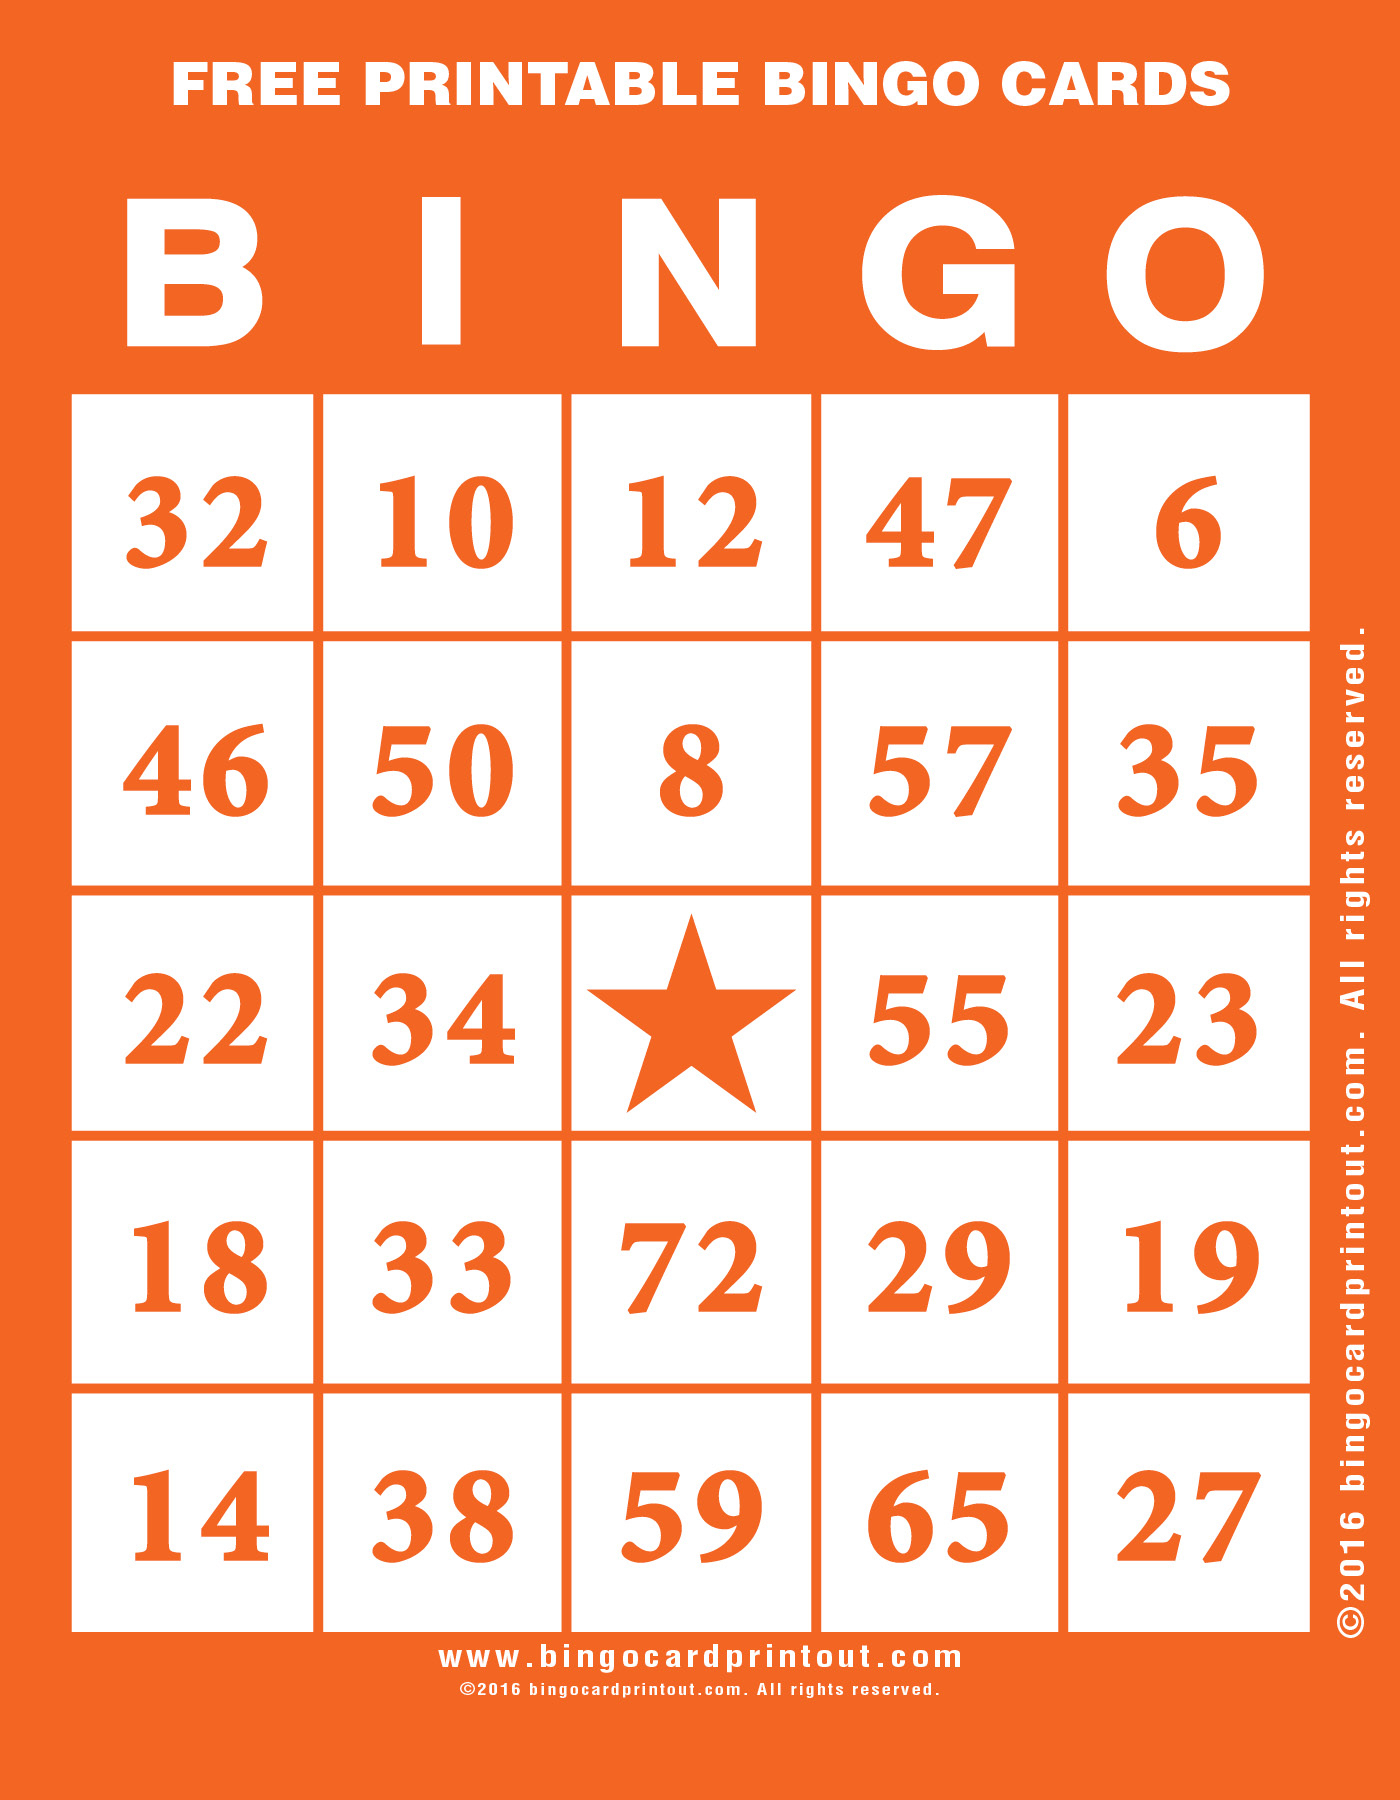 Free Printable Bingo Cards - Bingocardprintout